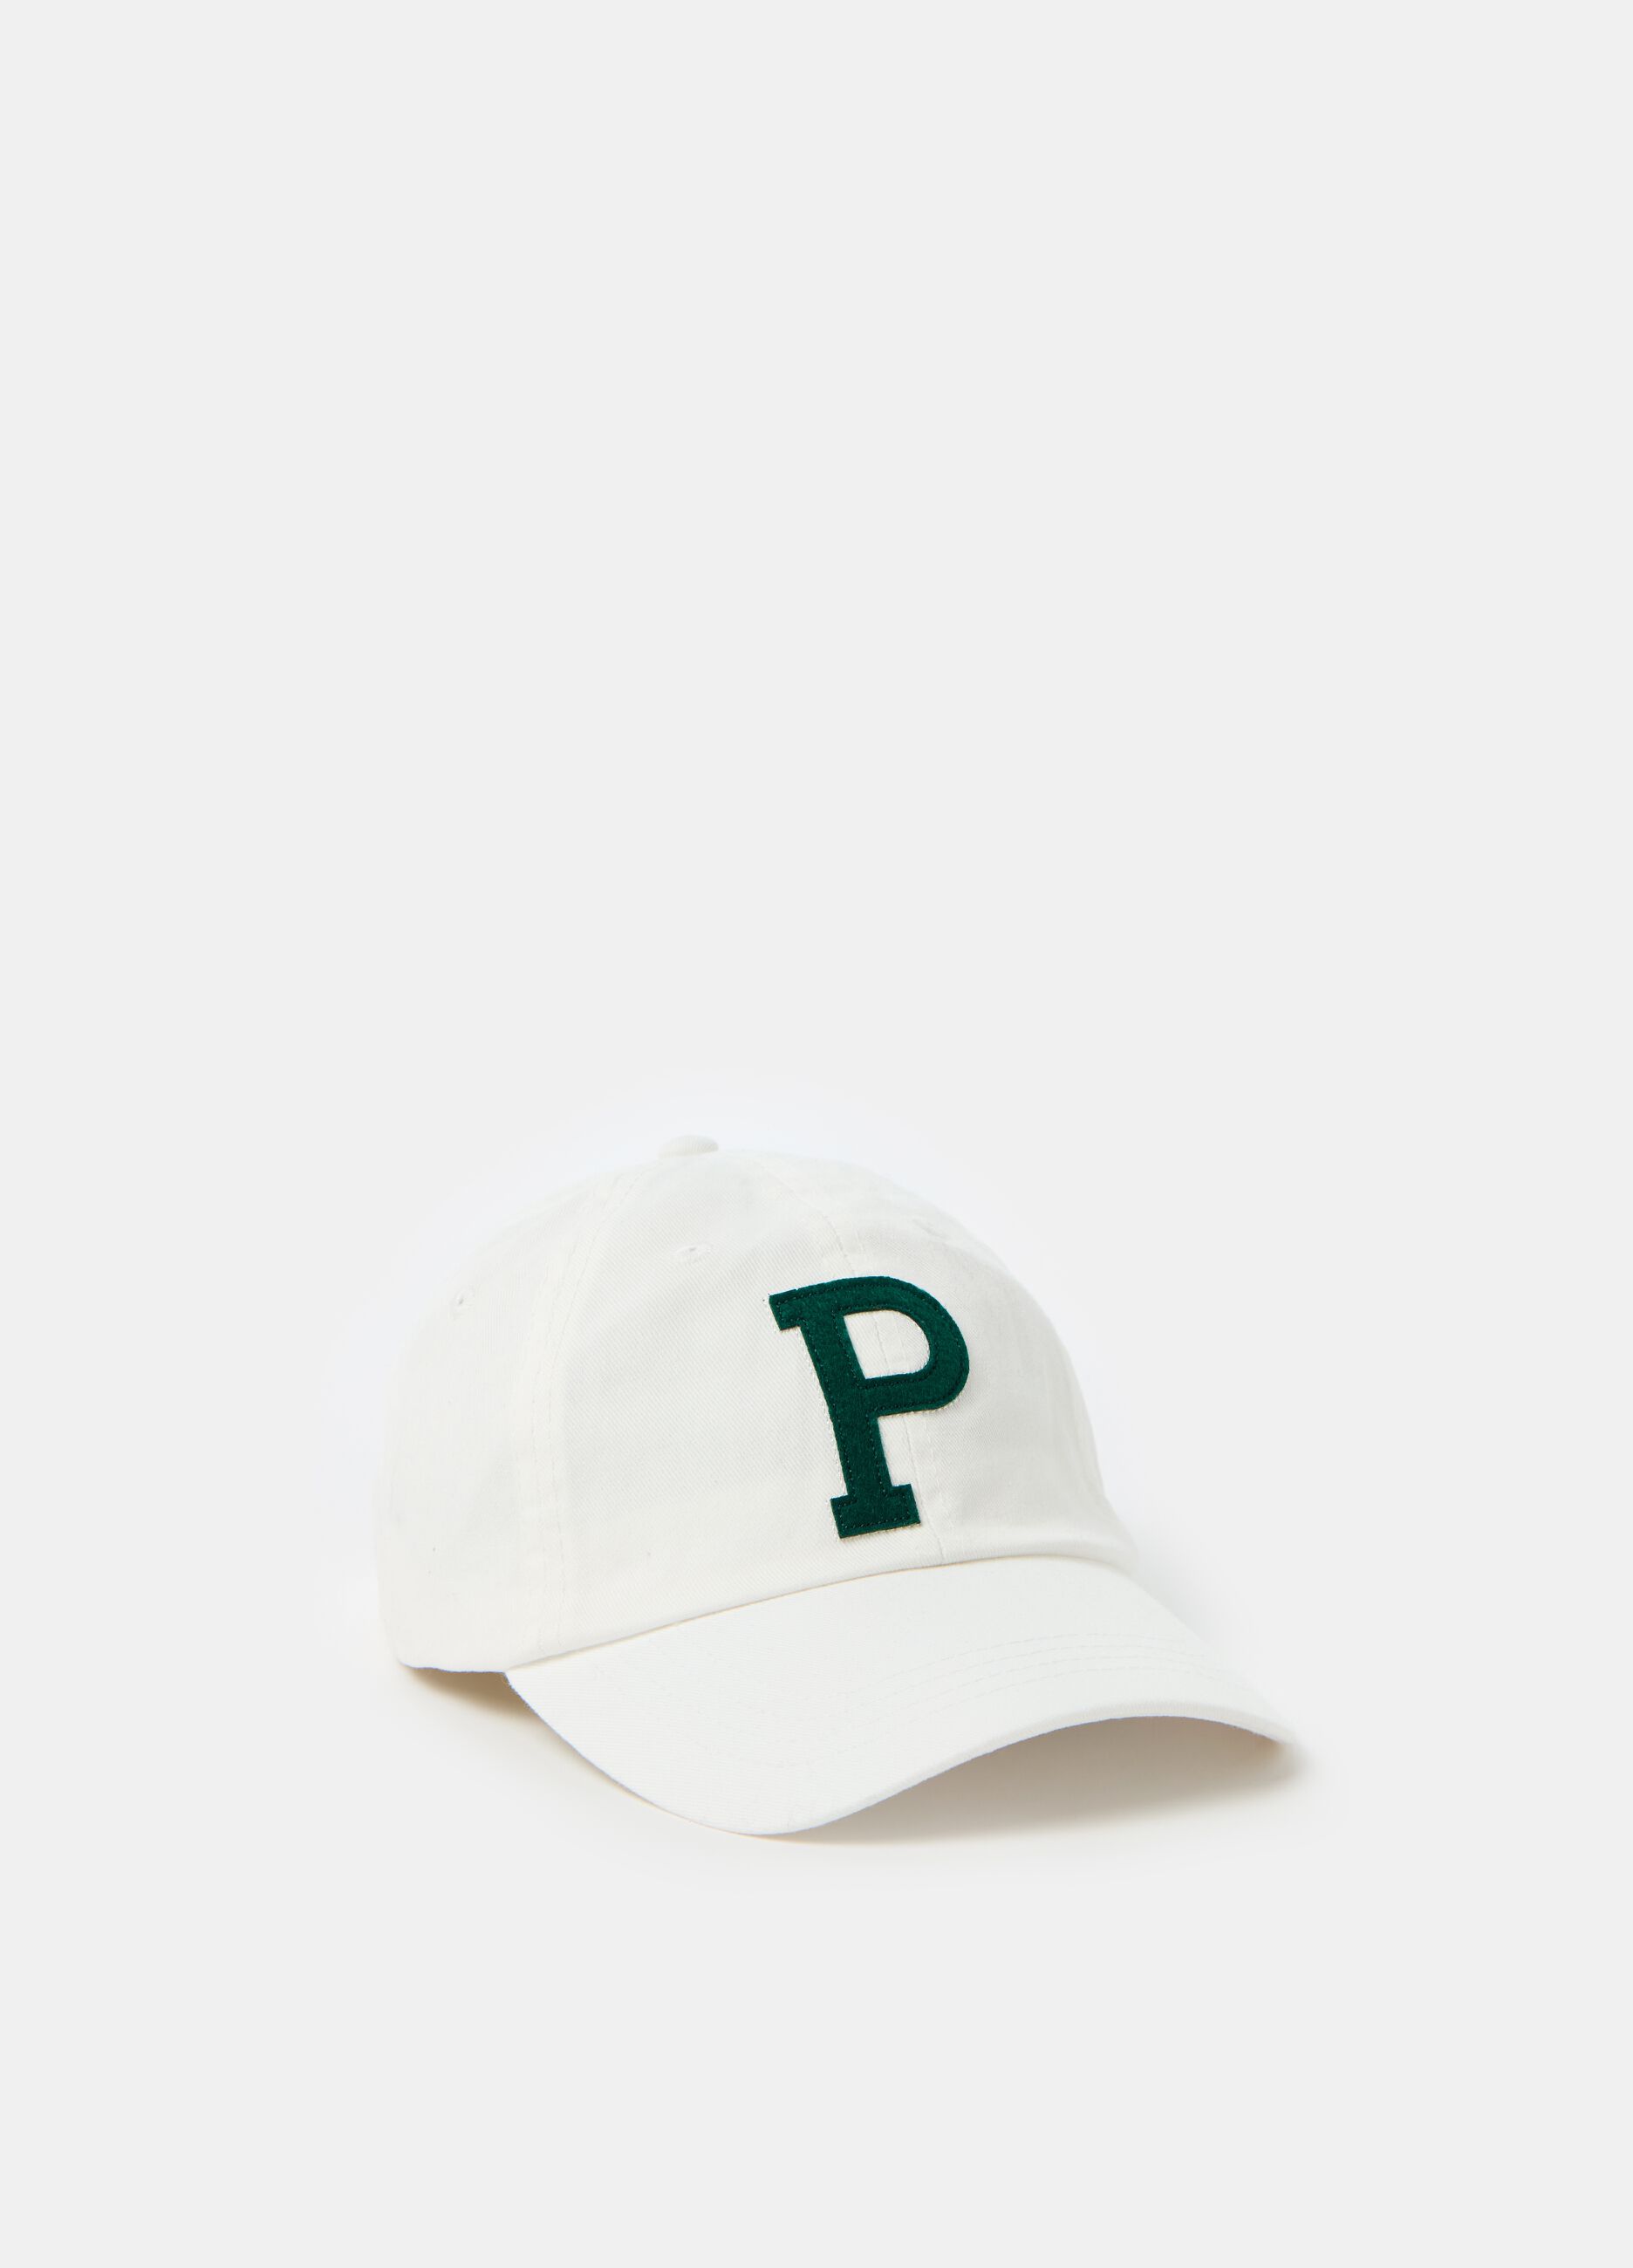 Baseball cap with logo